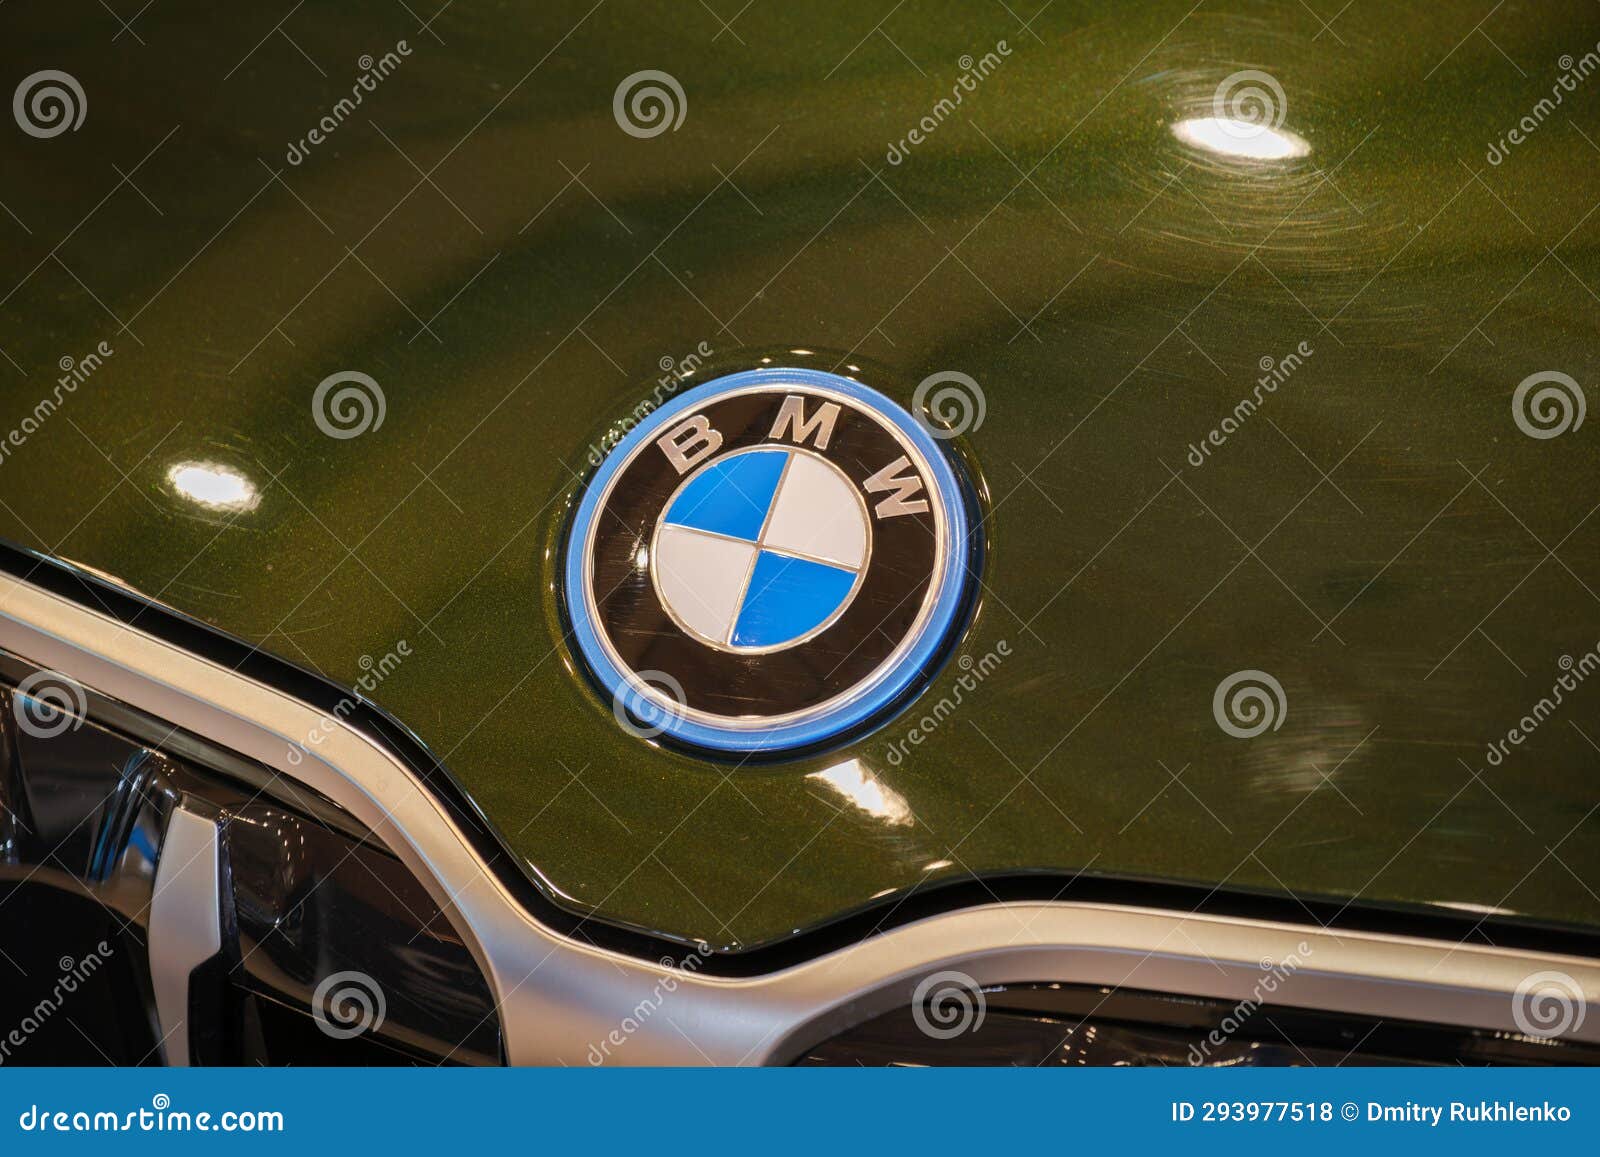 BMW electric car logo – Stock Editorial Photo © philipus #170851304